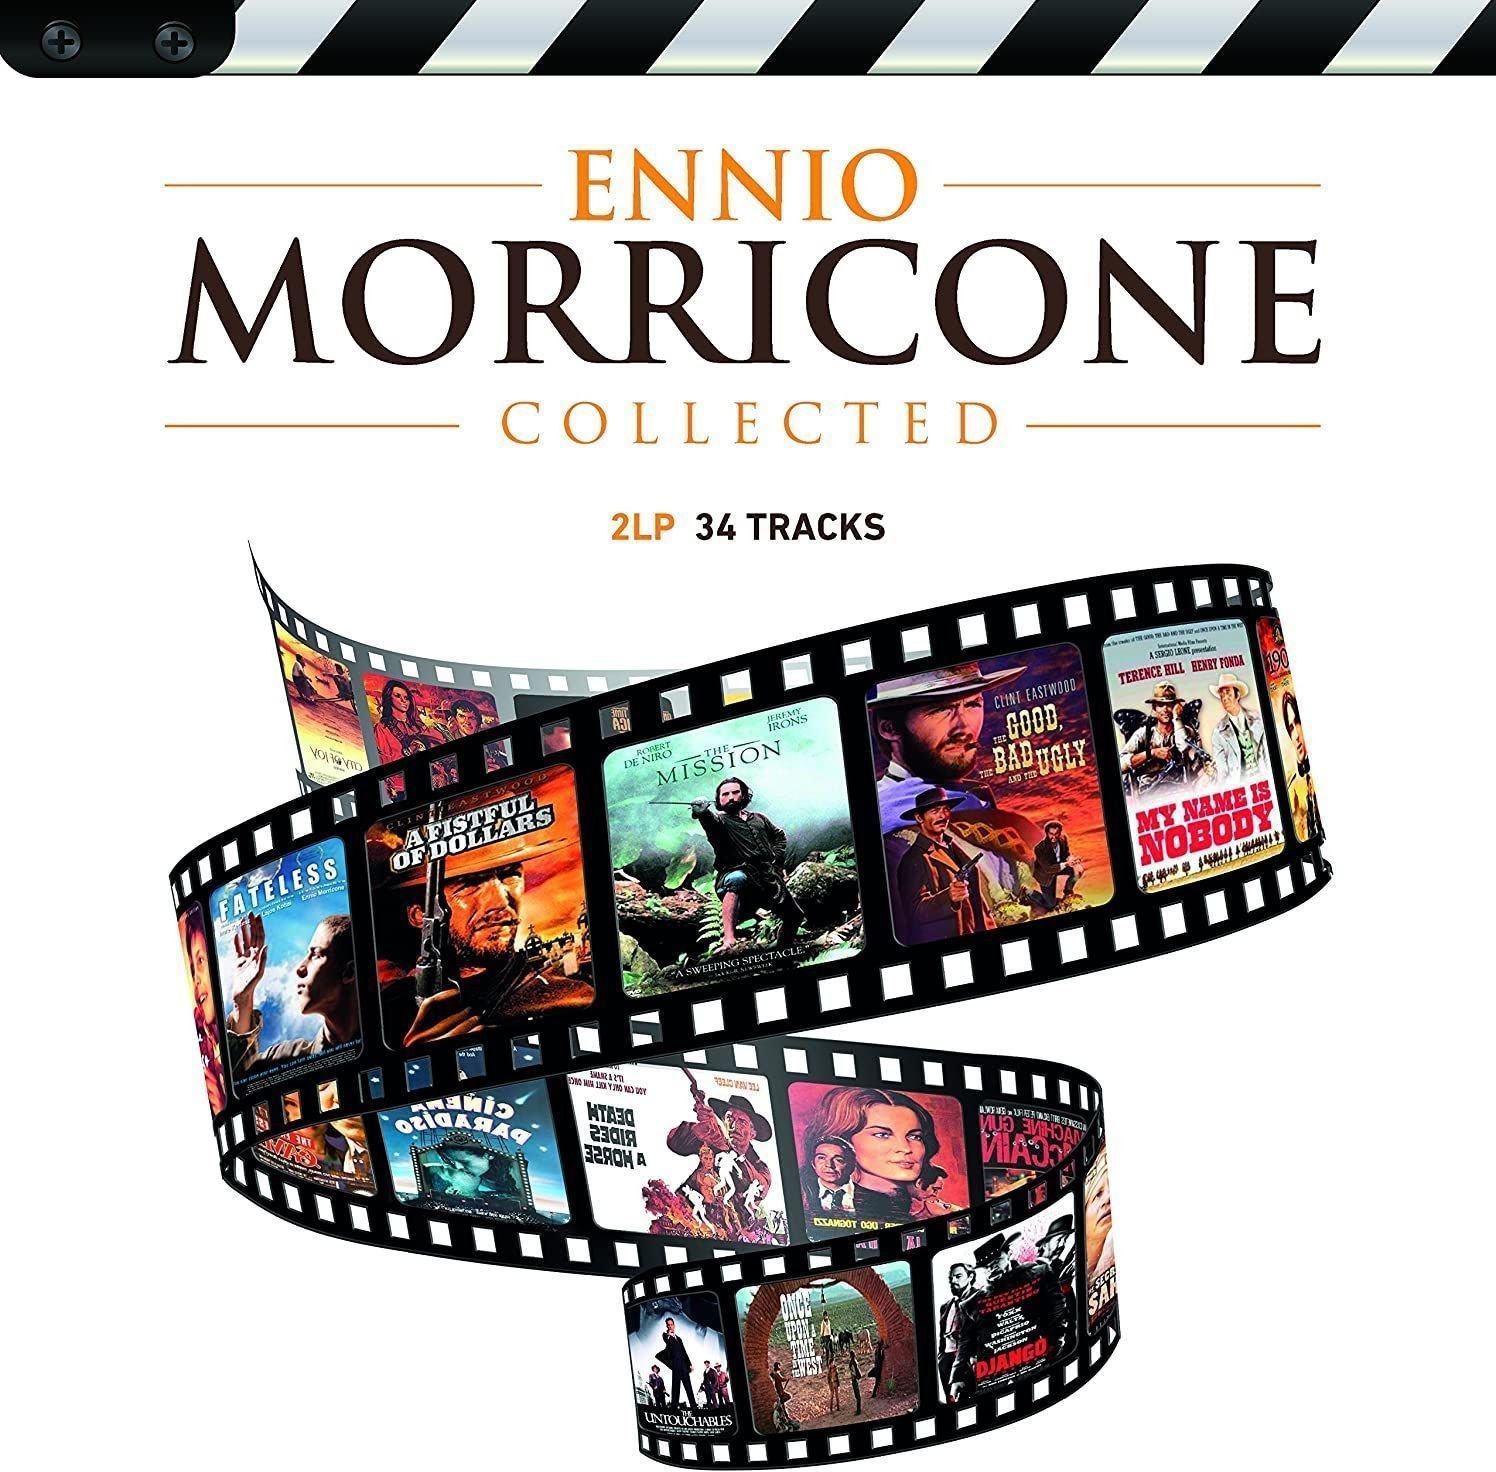 Ennio Morricone - Collected (Gatefold Sleeve) (2 LP)